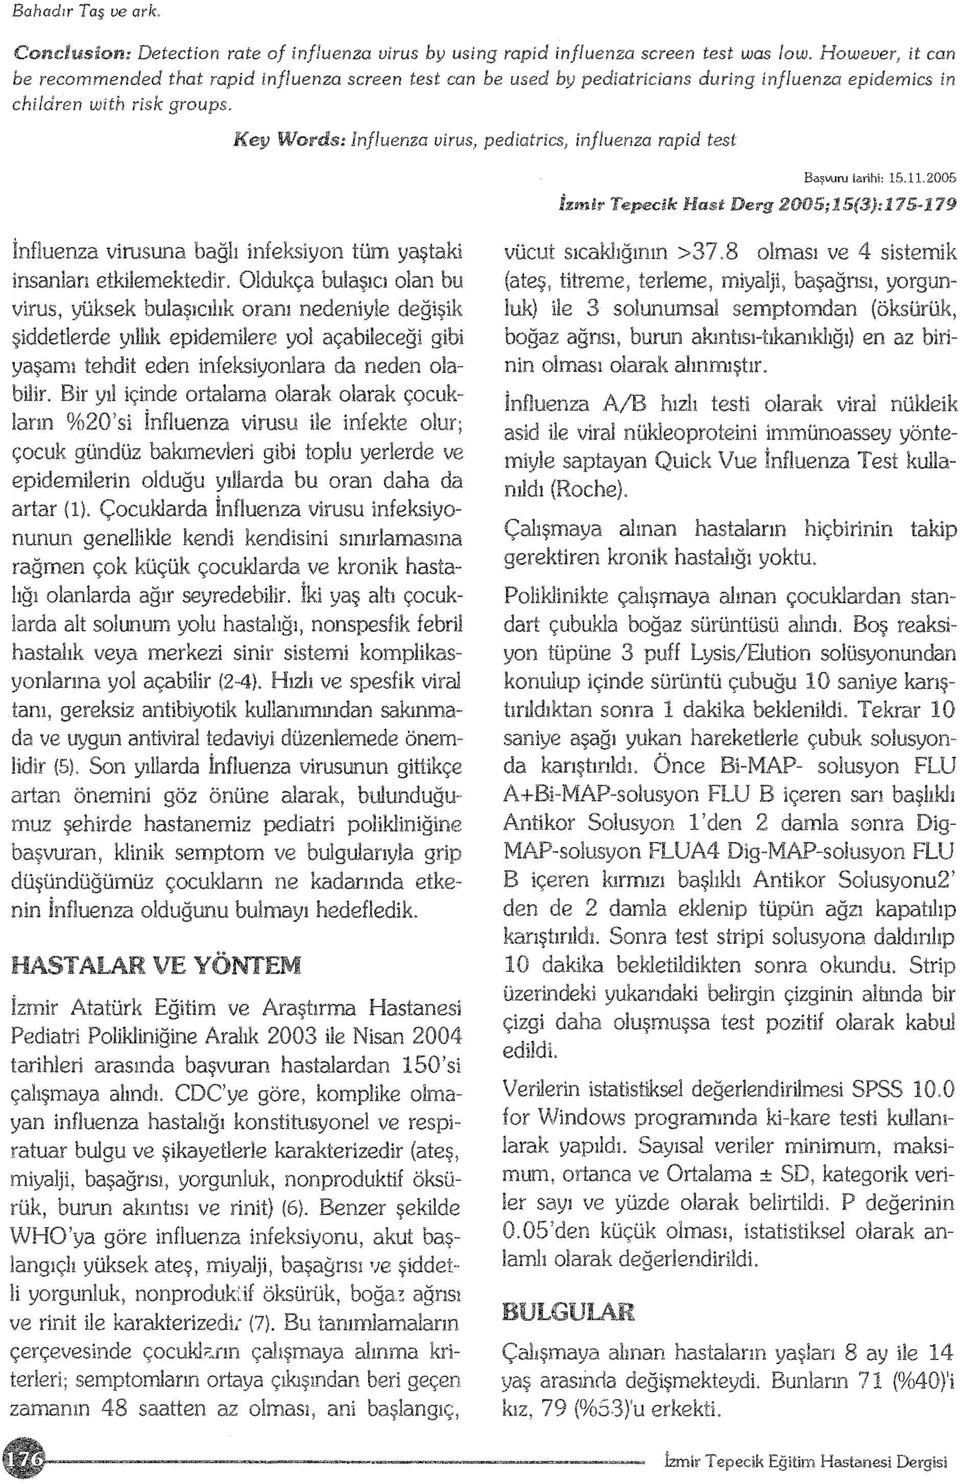 Key llllords: Influenza virus, pediatrics, influenza rapid test in Başvuru tarihi, 15.11.